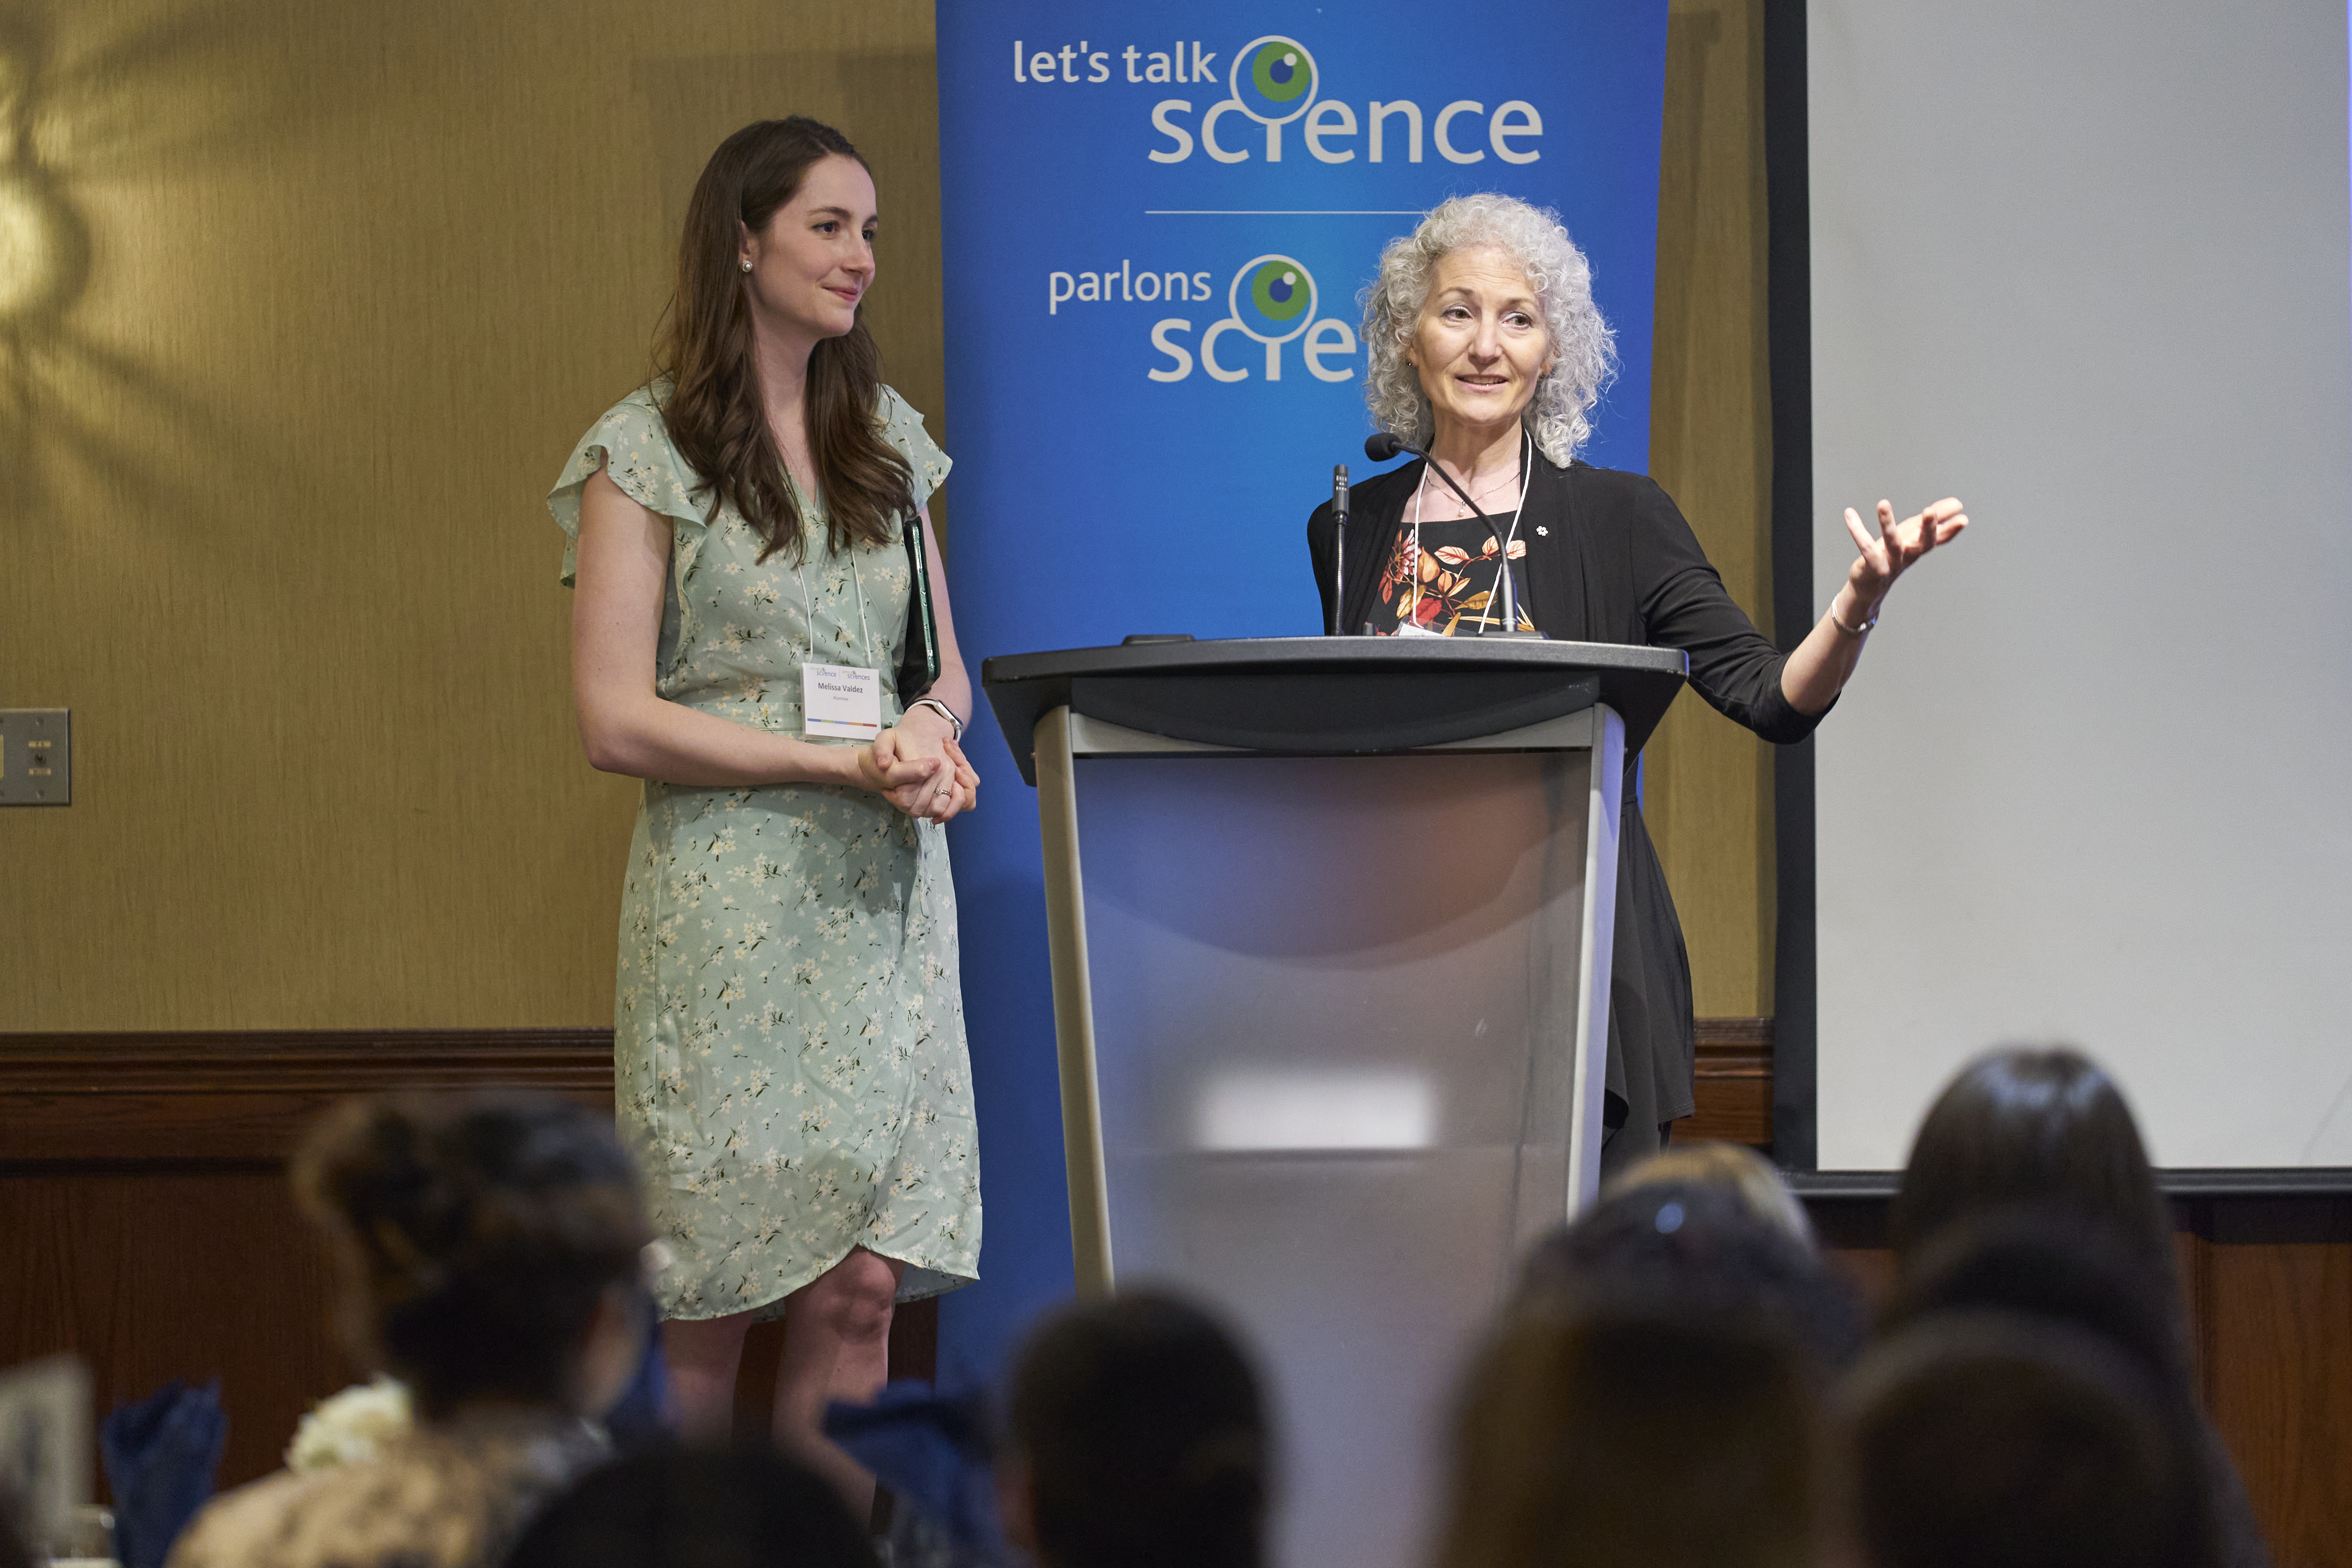 Melissa Valdez and Bonnie Schmidt at a podium in front of a blue Let's Talk Science banner